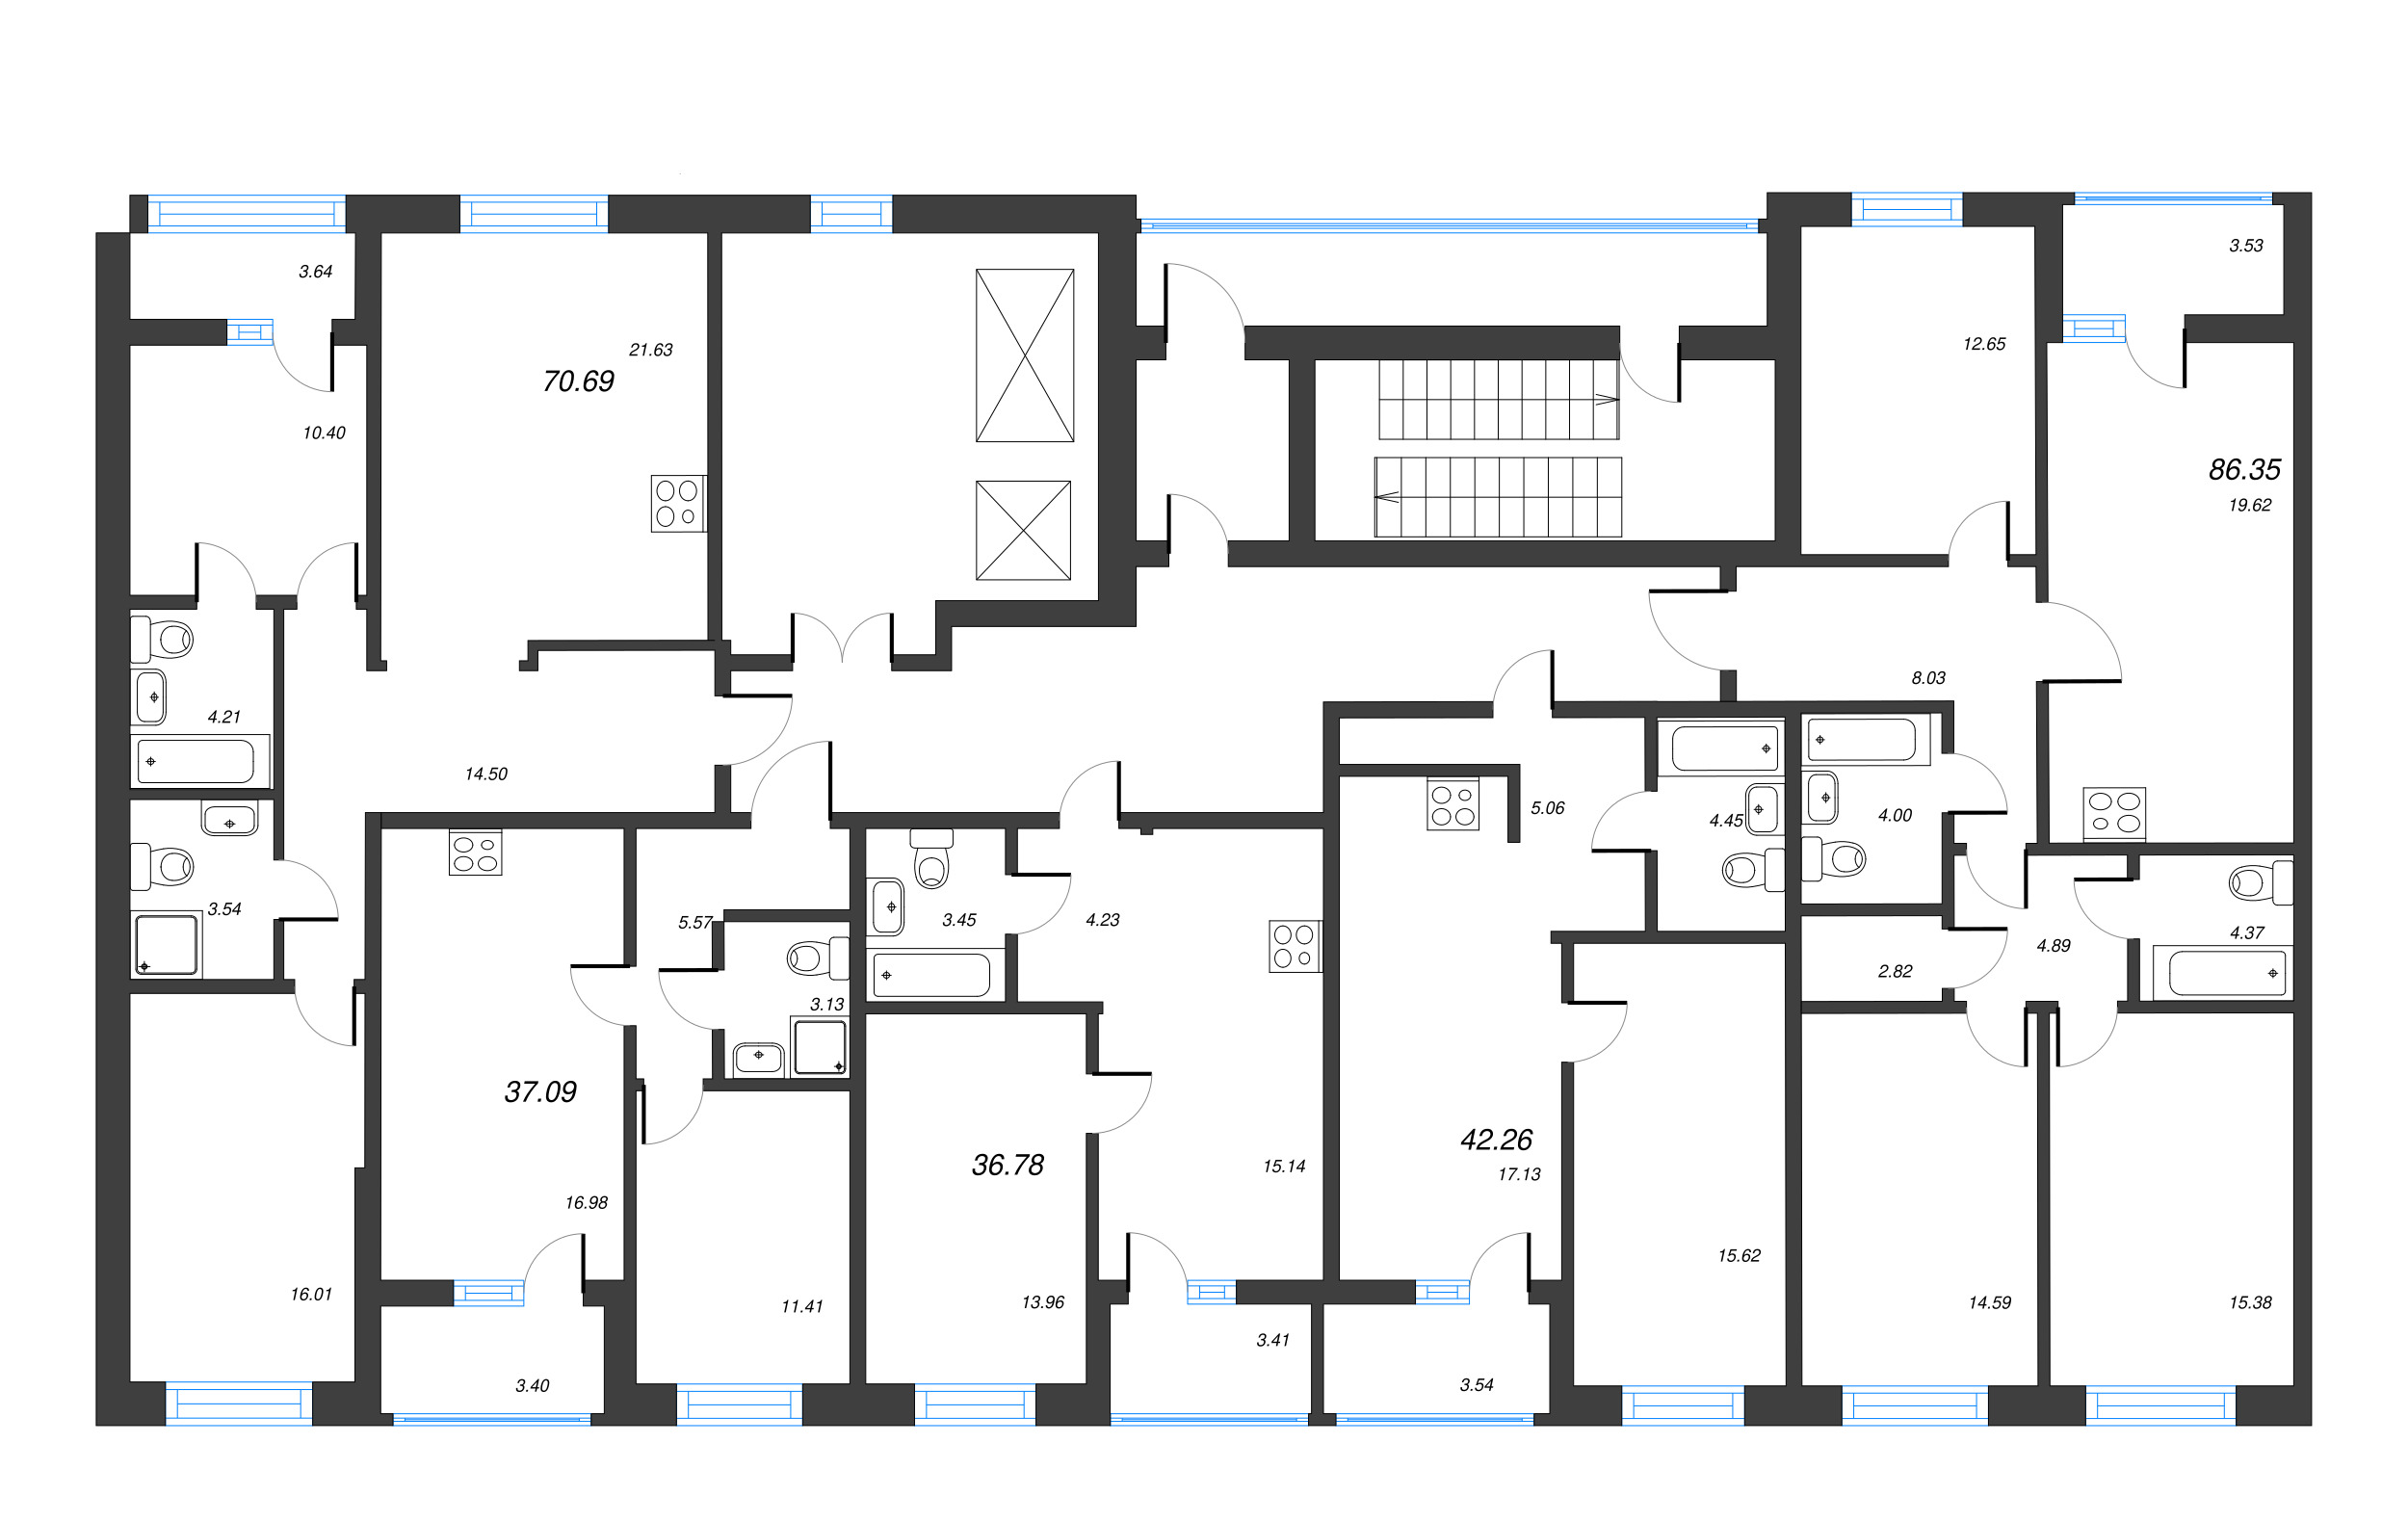 2-комнатная (Евро) квартира, 39.16 м² - планировка этажа